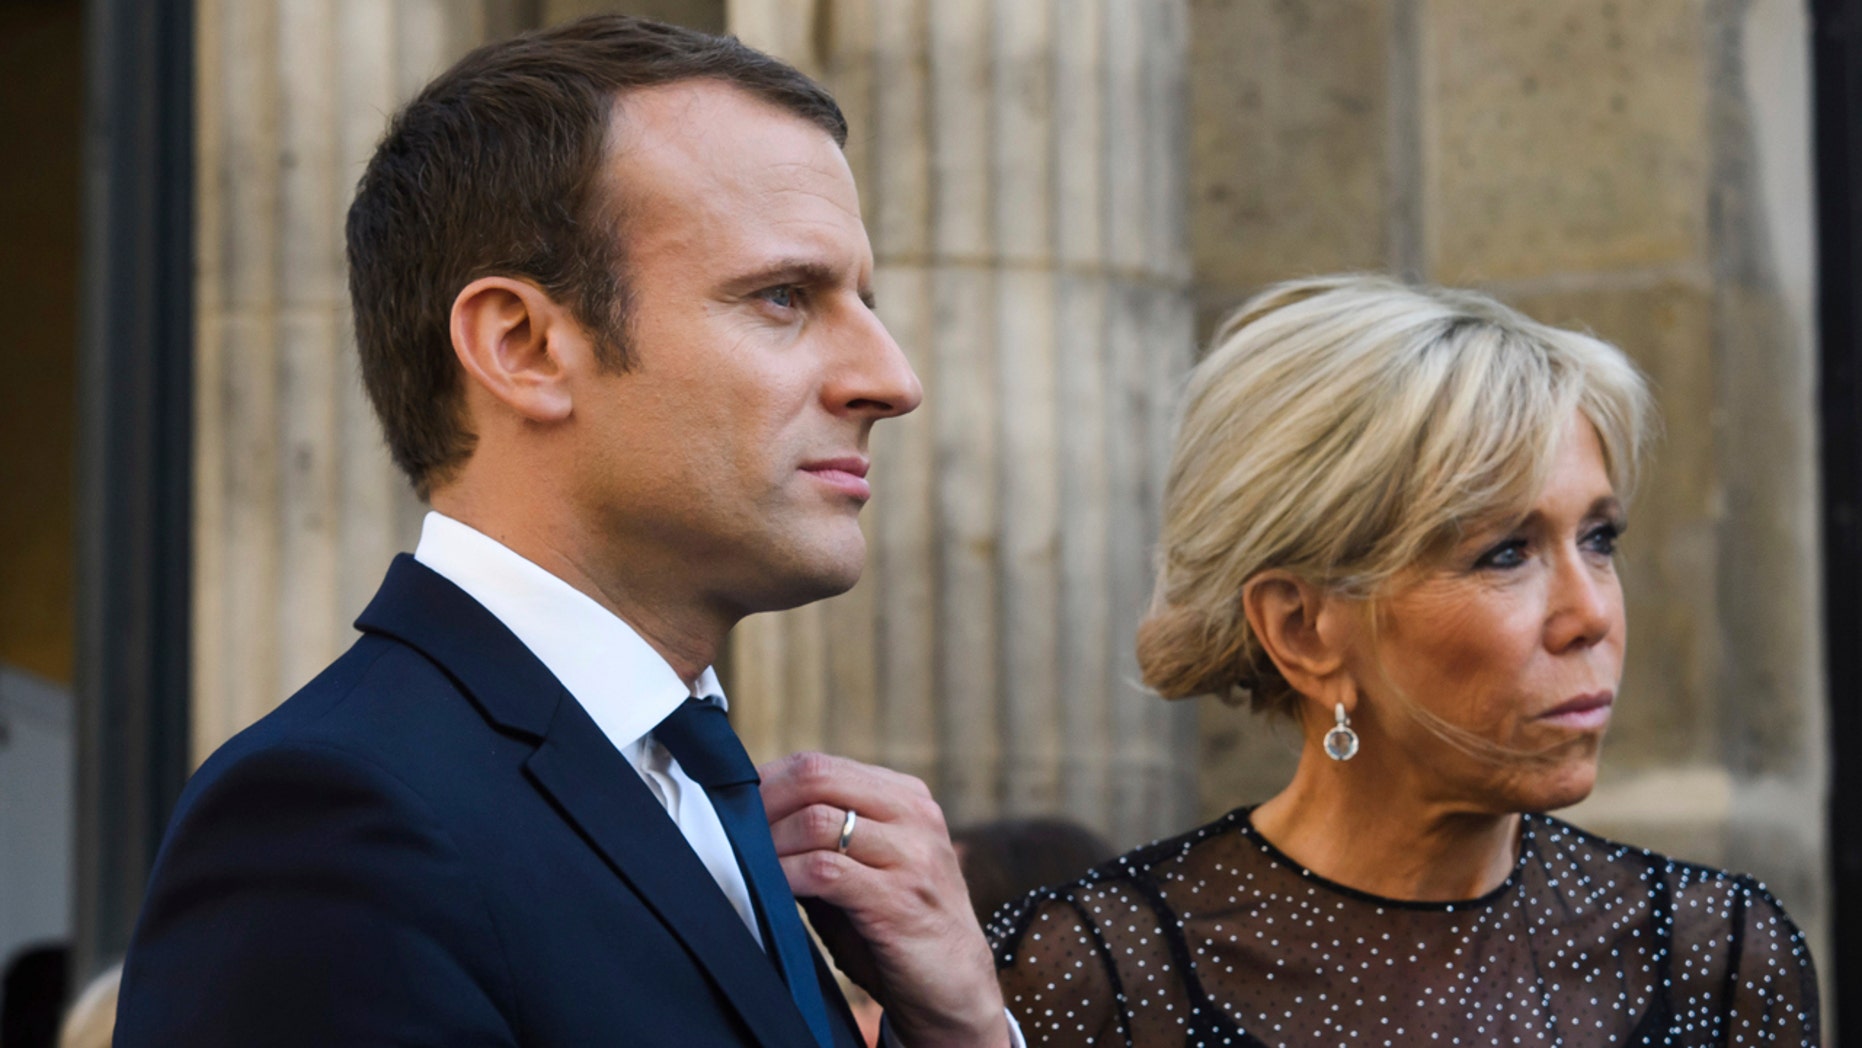 French President Macron S Make Up Expenses Draw Scrutiny Fox News